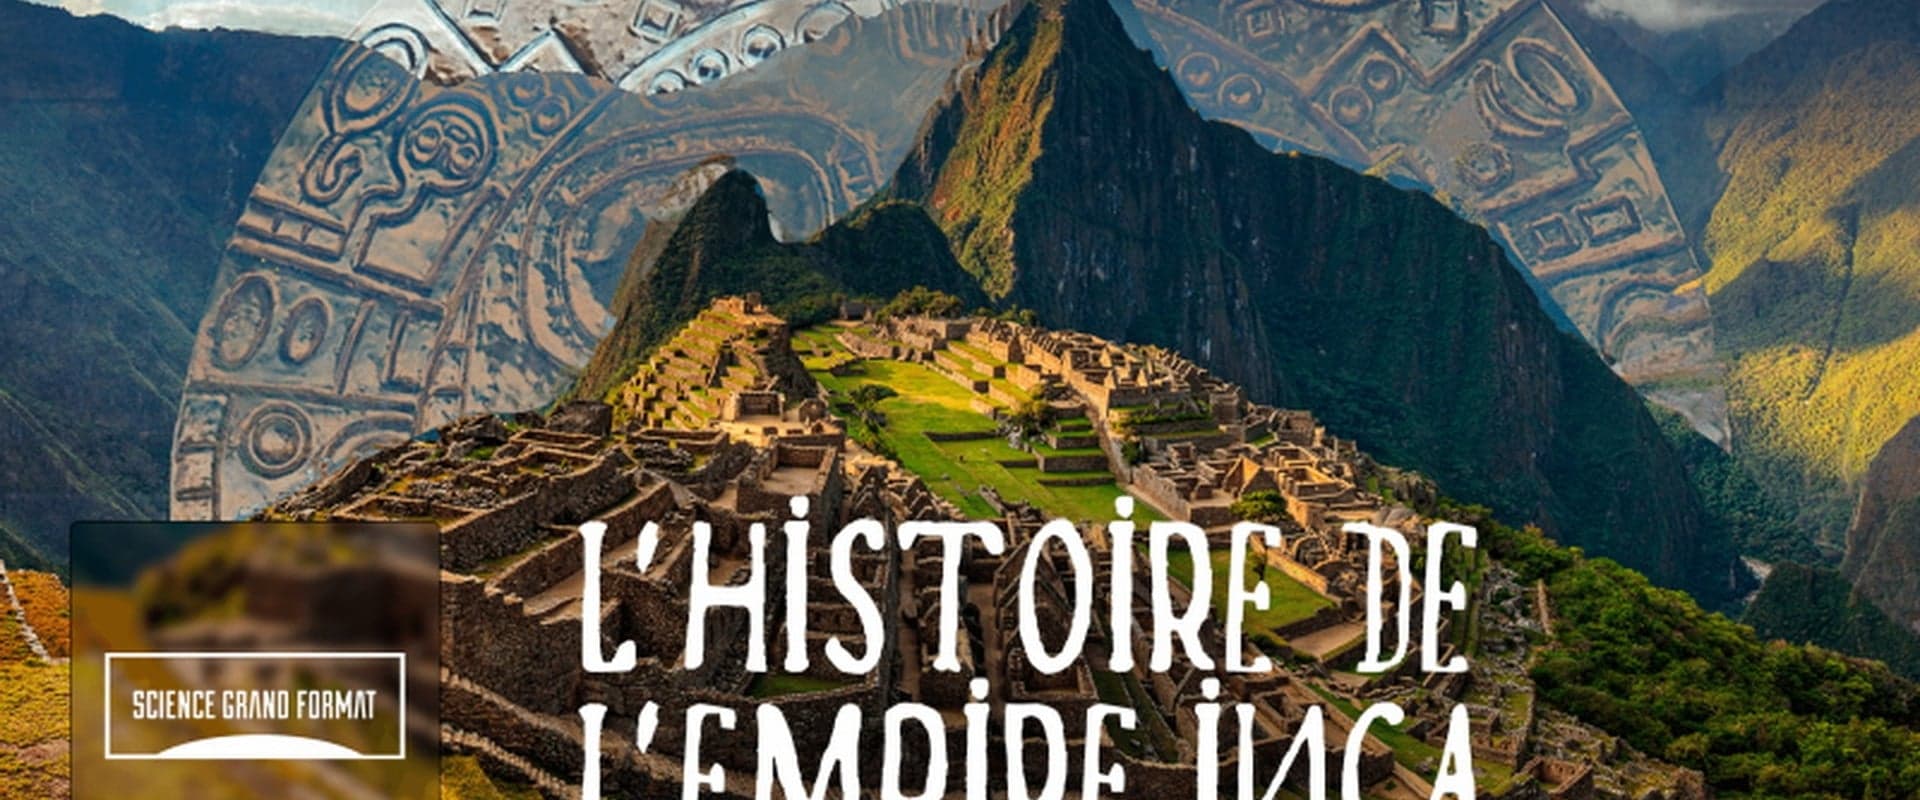 Inca Apocalypse: The Dark Evidence